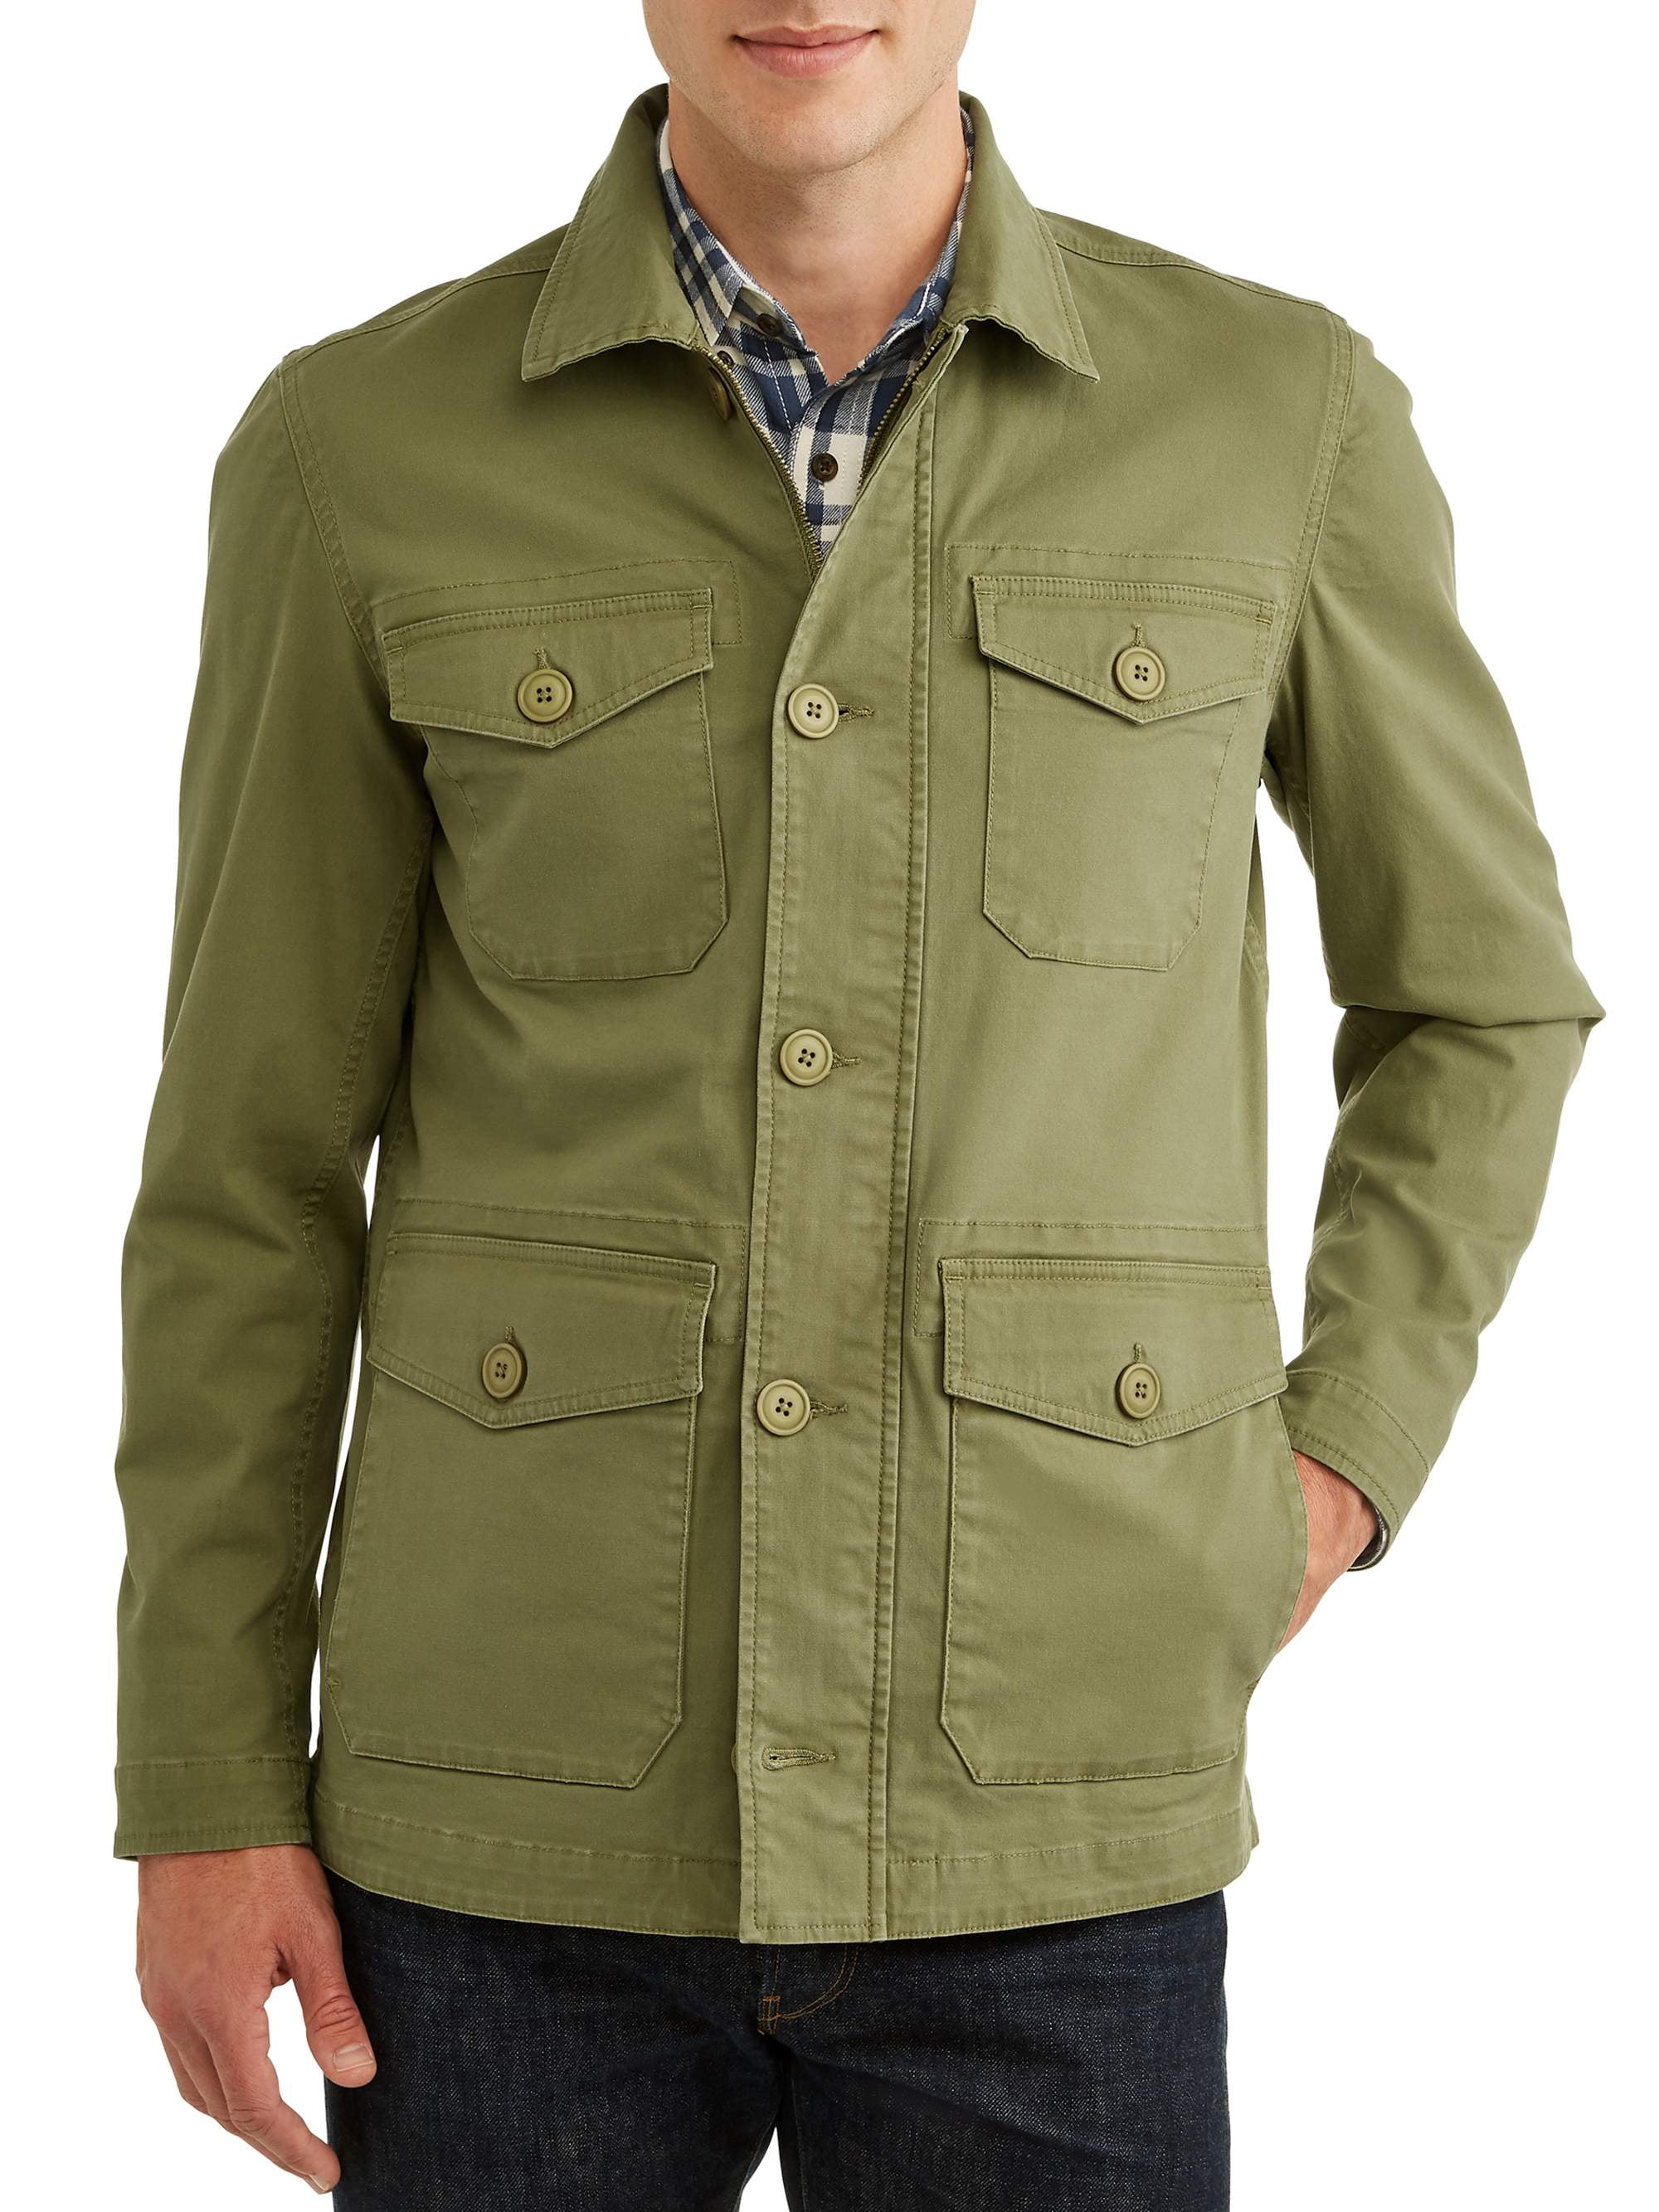 George Men's Field Jacket, up to Size 3XL - Walmart.com